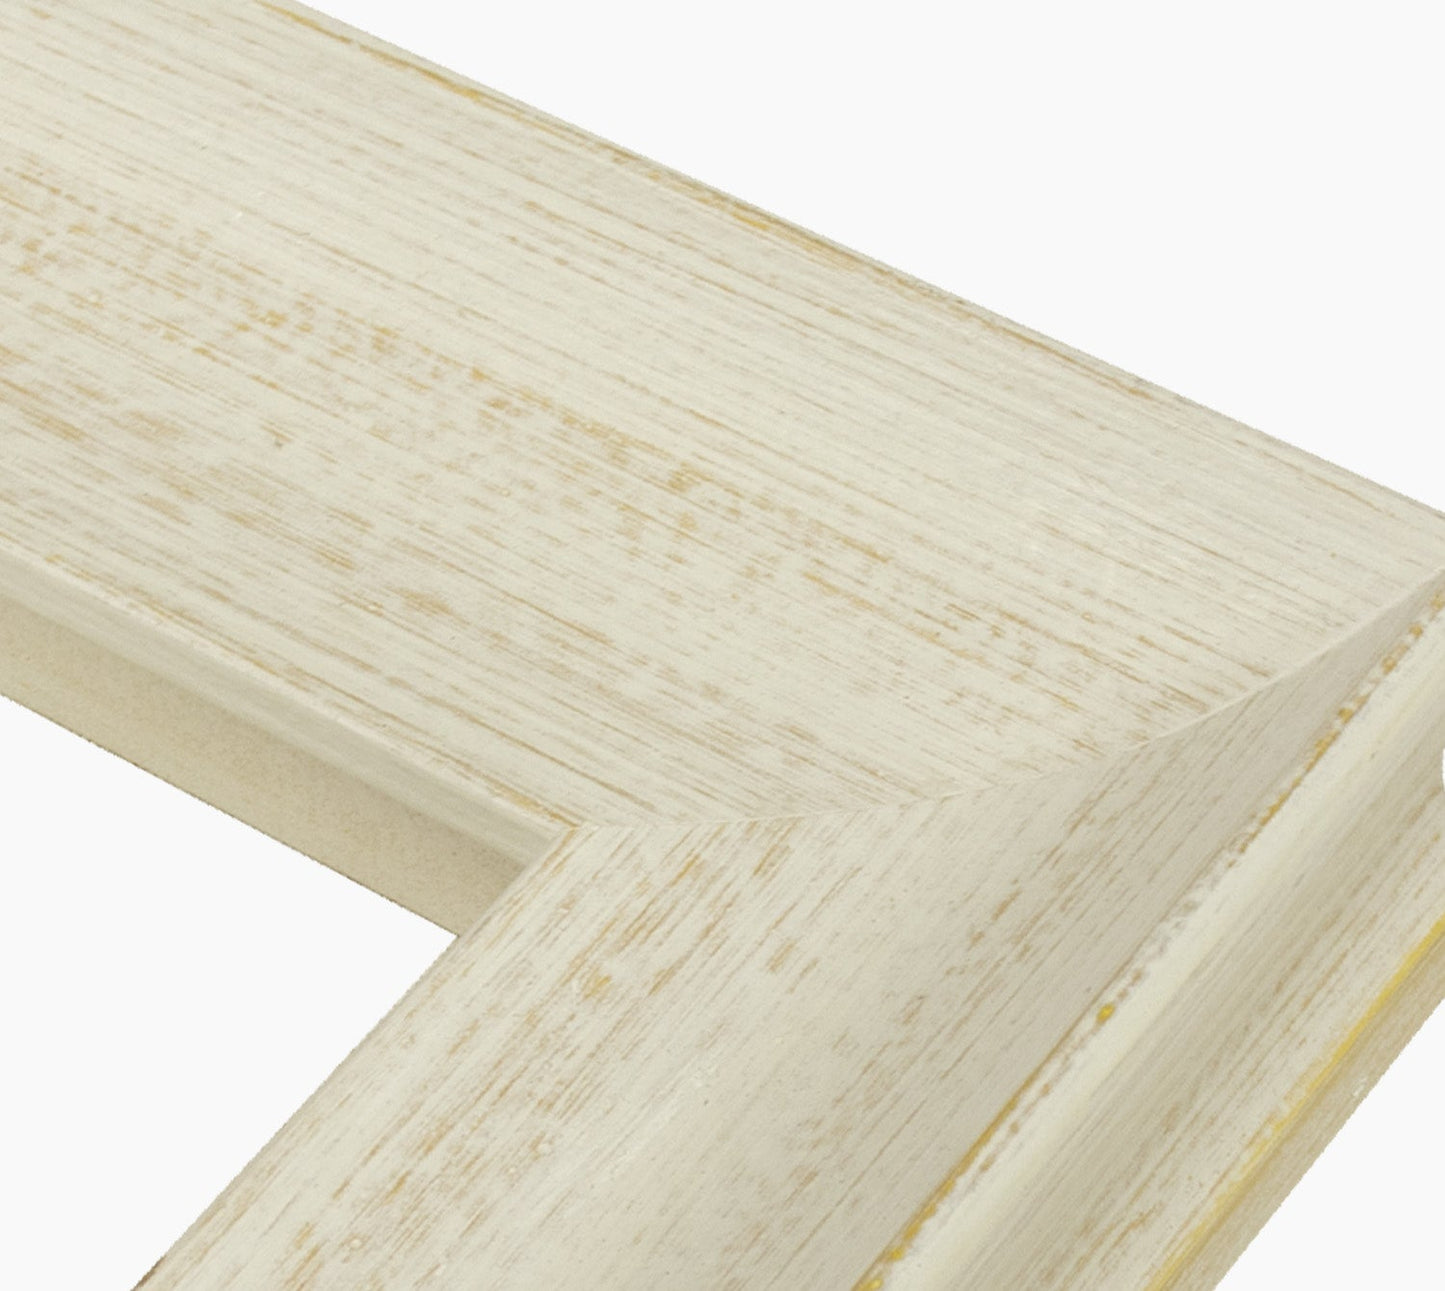 444.915 cadre en bois à fond ocre blanc mesure de profil 65x55 mm Lombarda cornici S.n.c.